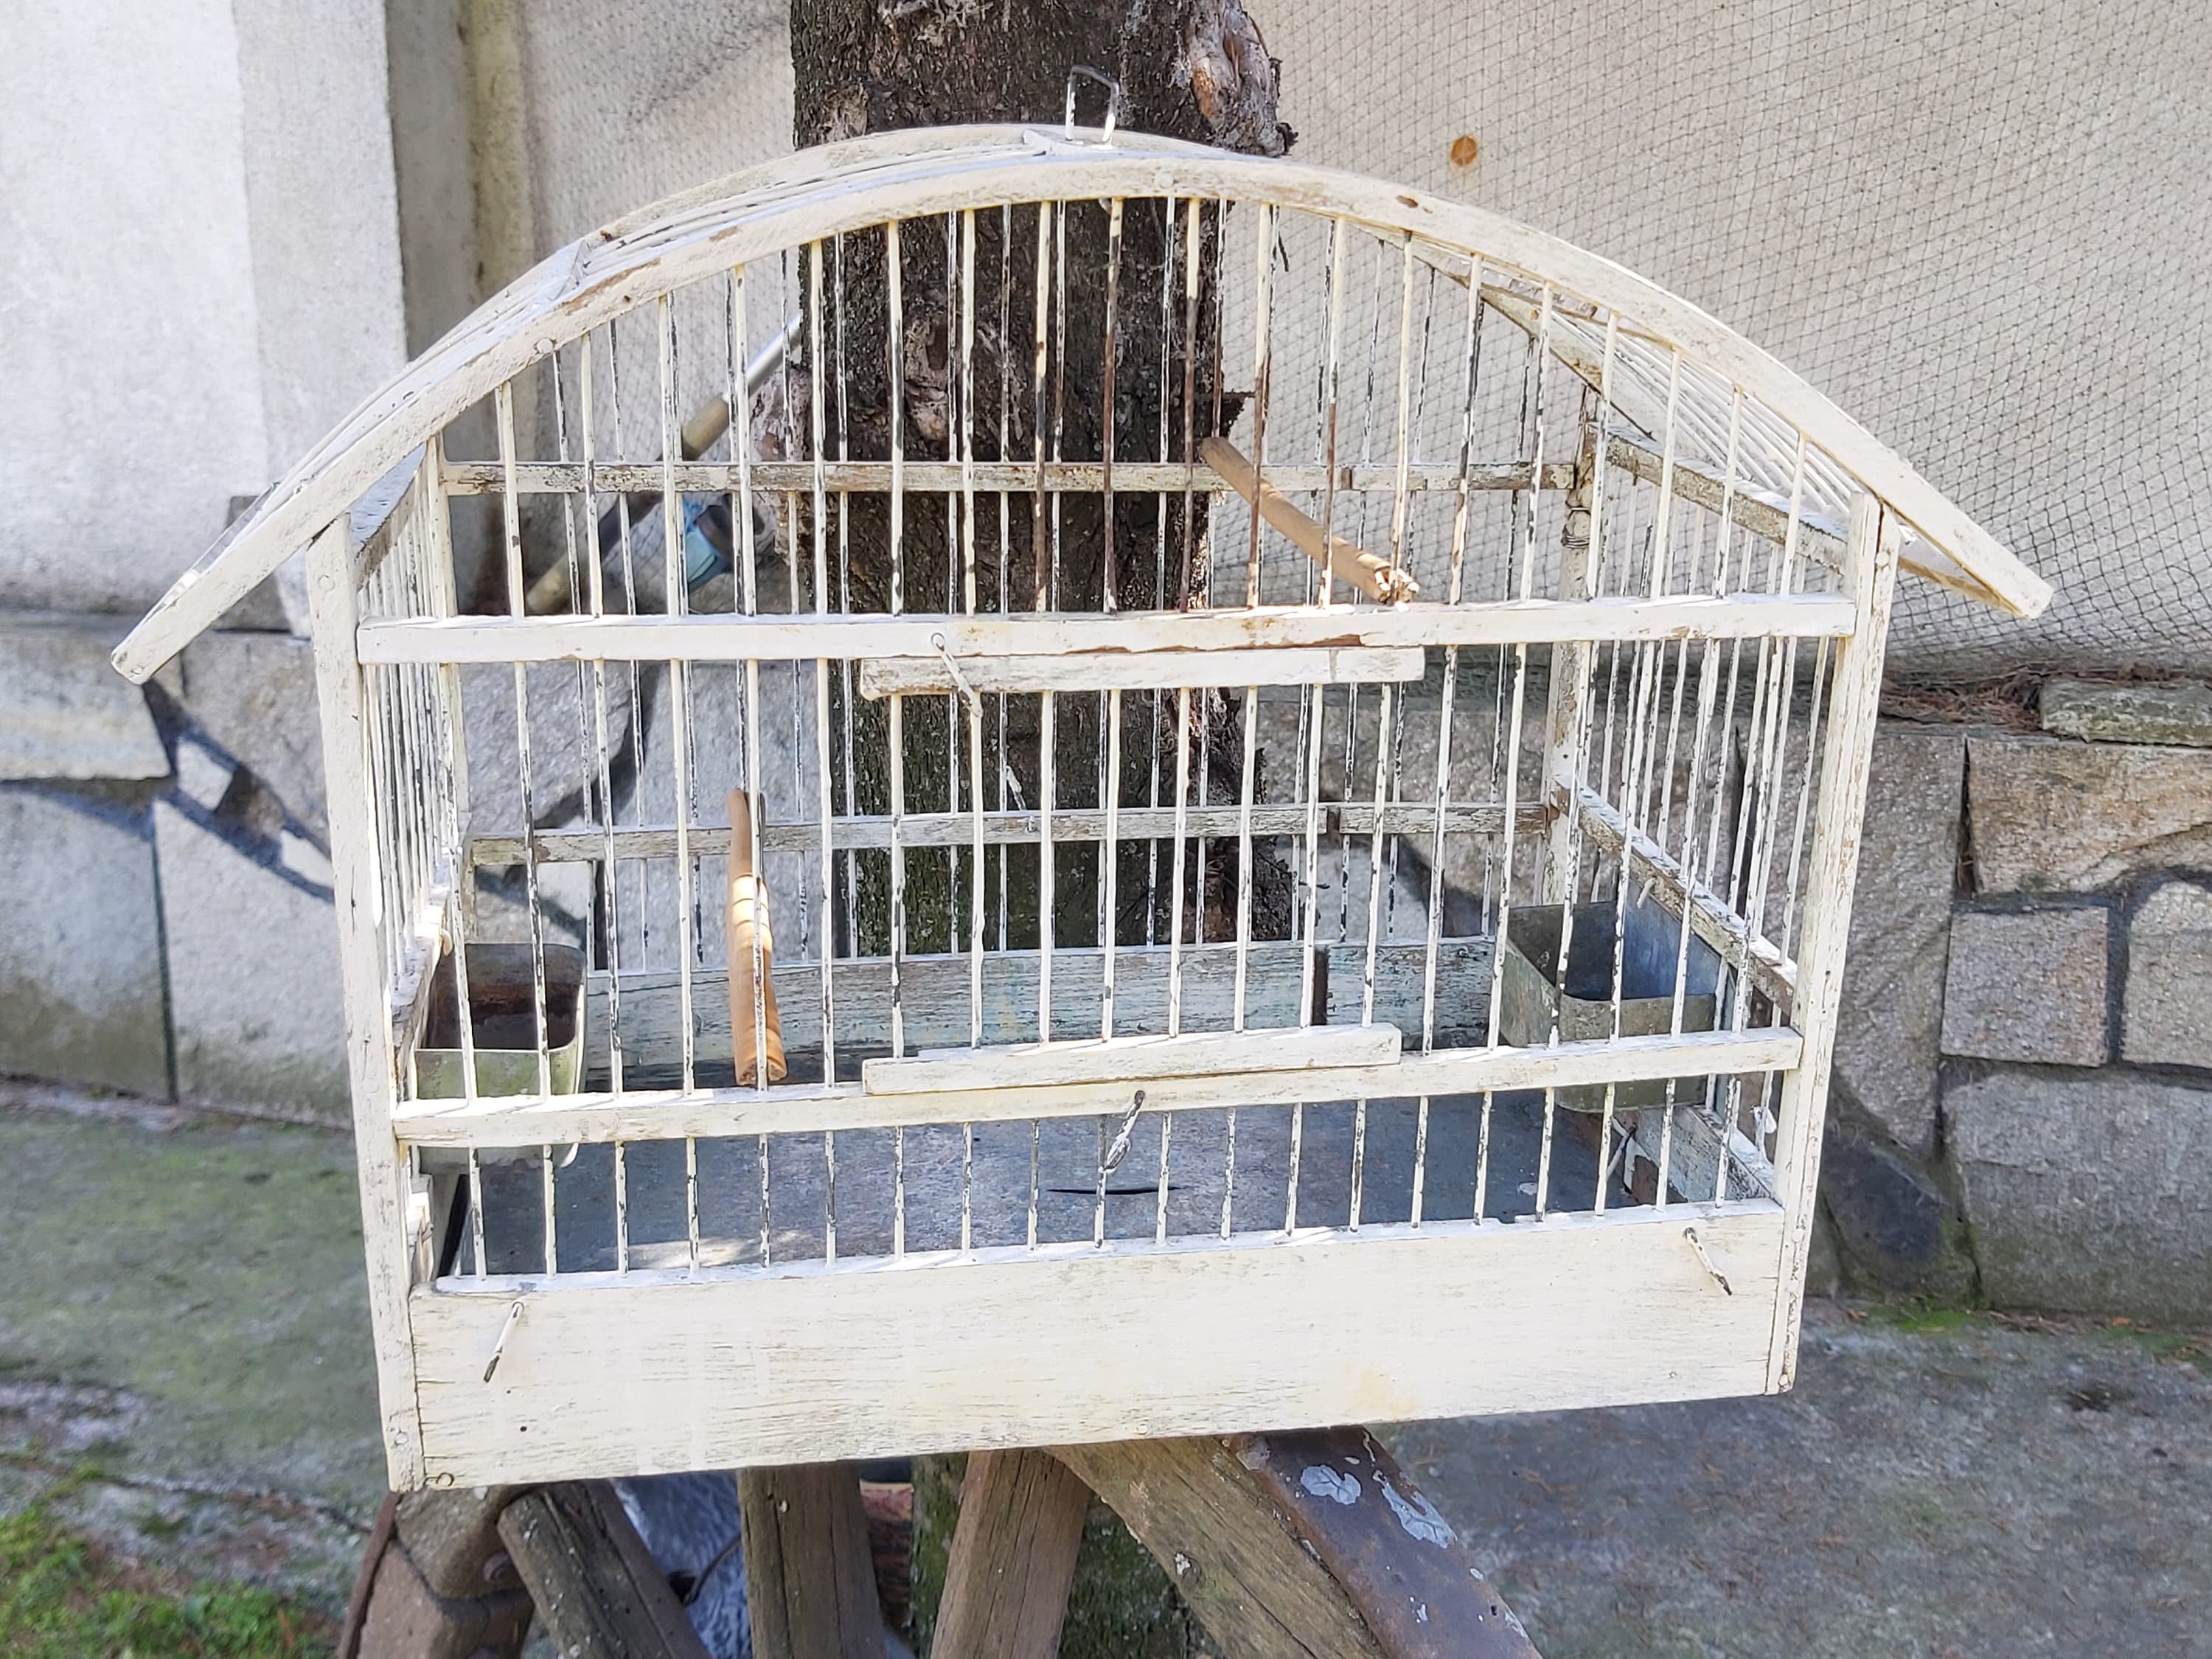 Vintage Cage, Brass Bird Cage, Decorative Hanging Cage, Veranda Décor,  Patio, Winter Garden, Brass Bird Cage, Vintage Brass Decor 